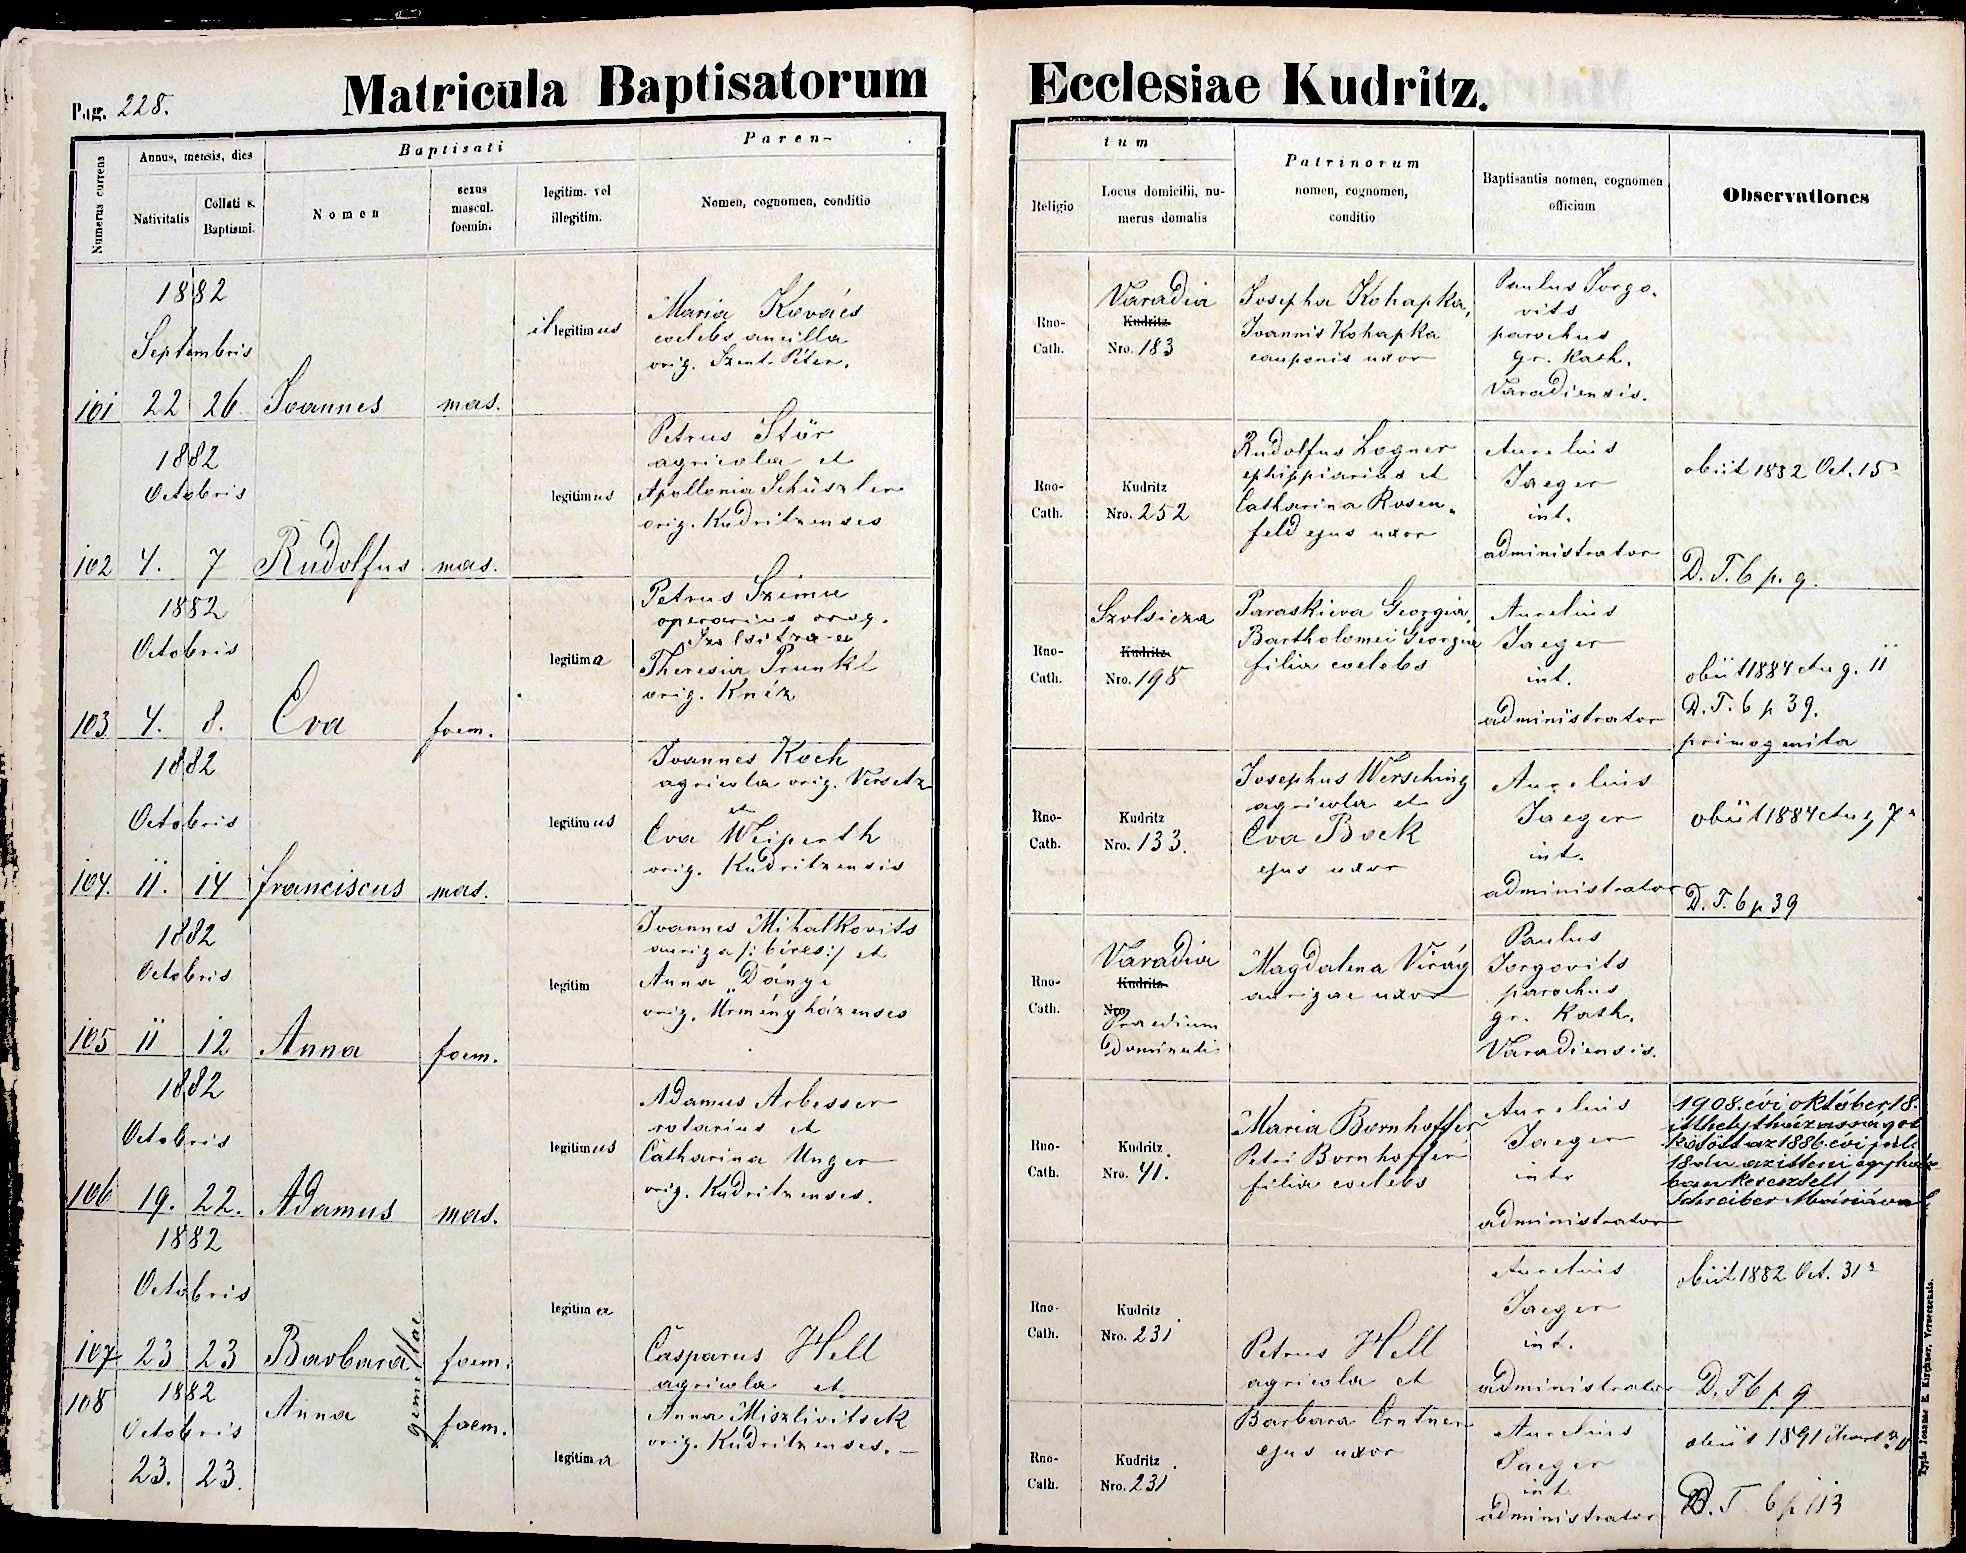 images/church_records/BIRTHS/1880-1883B/1882/228